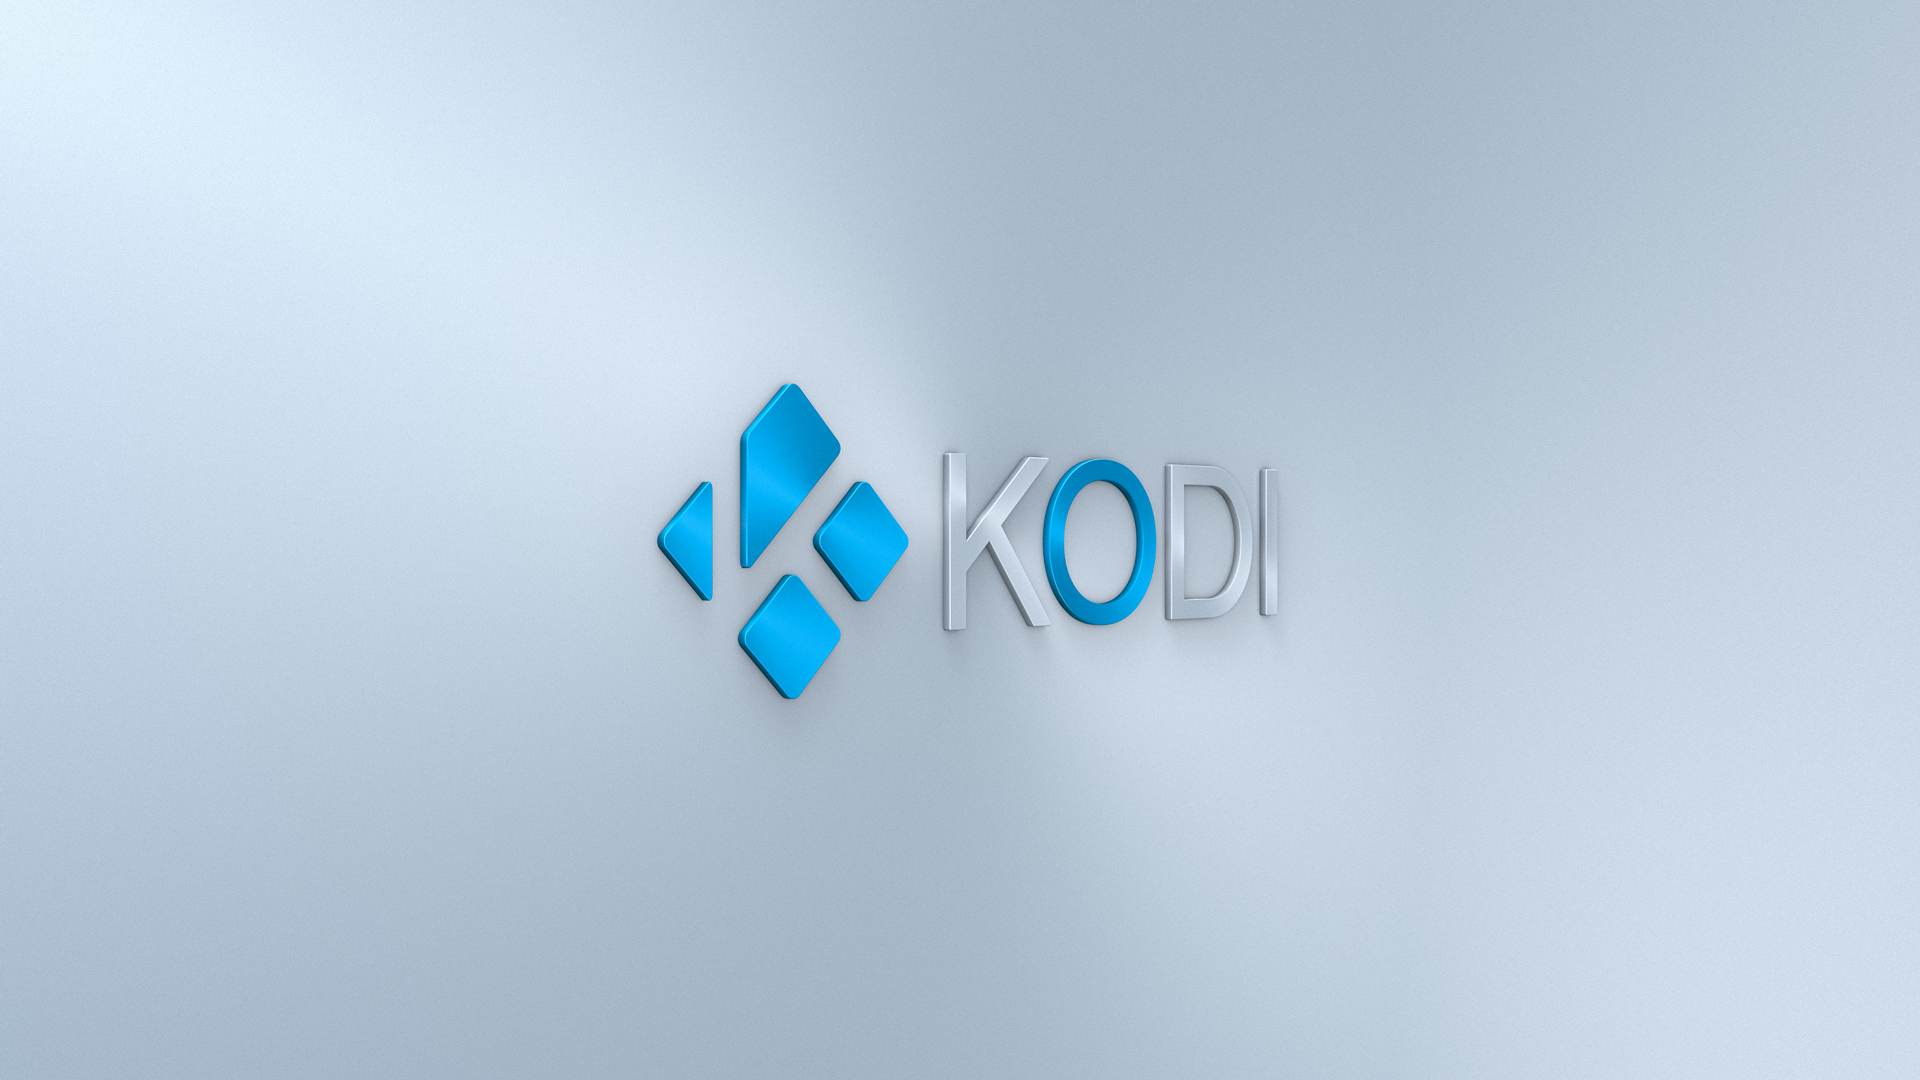 Kodi-Wallpaper-15B-1080p samfisher.jpg